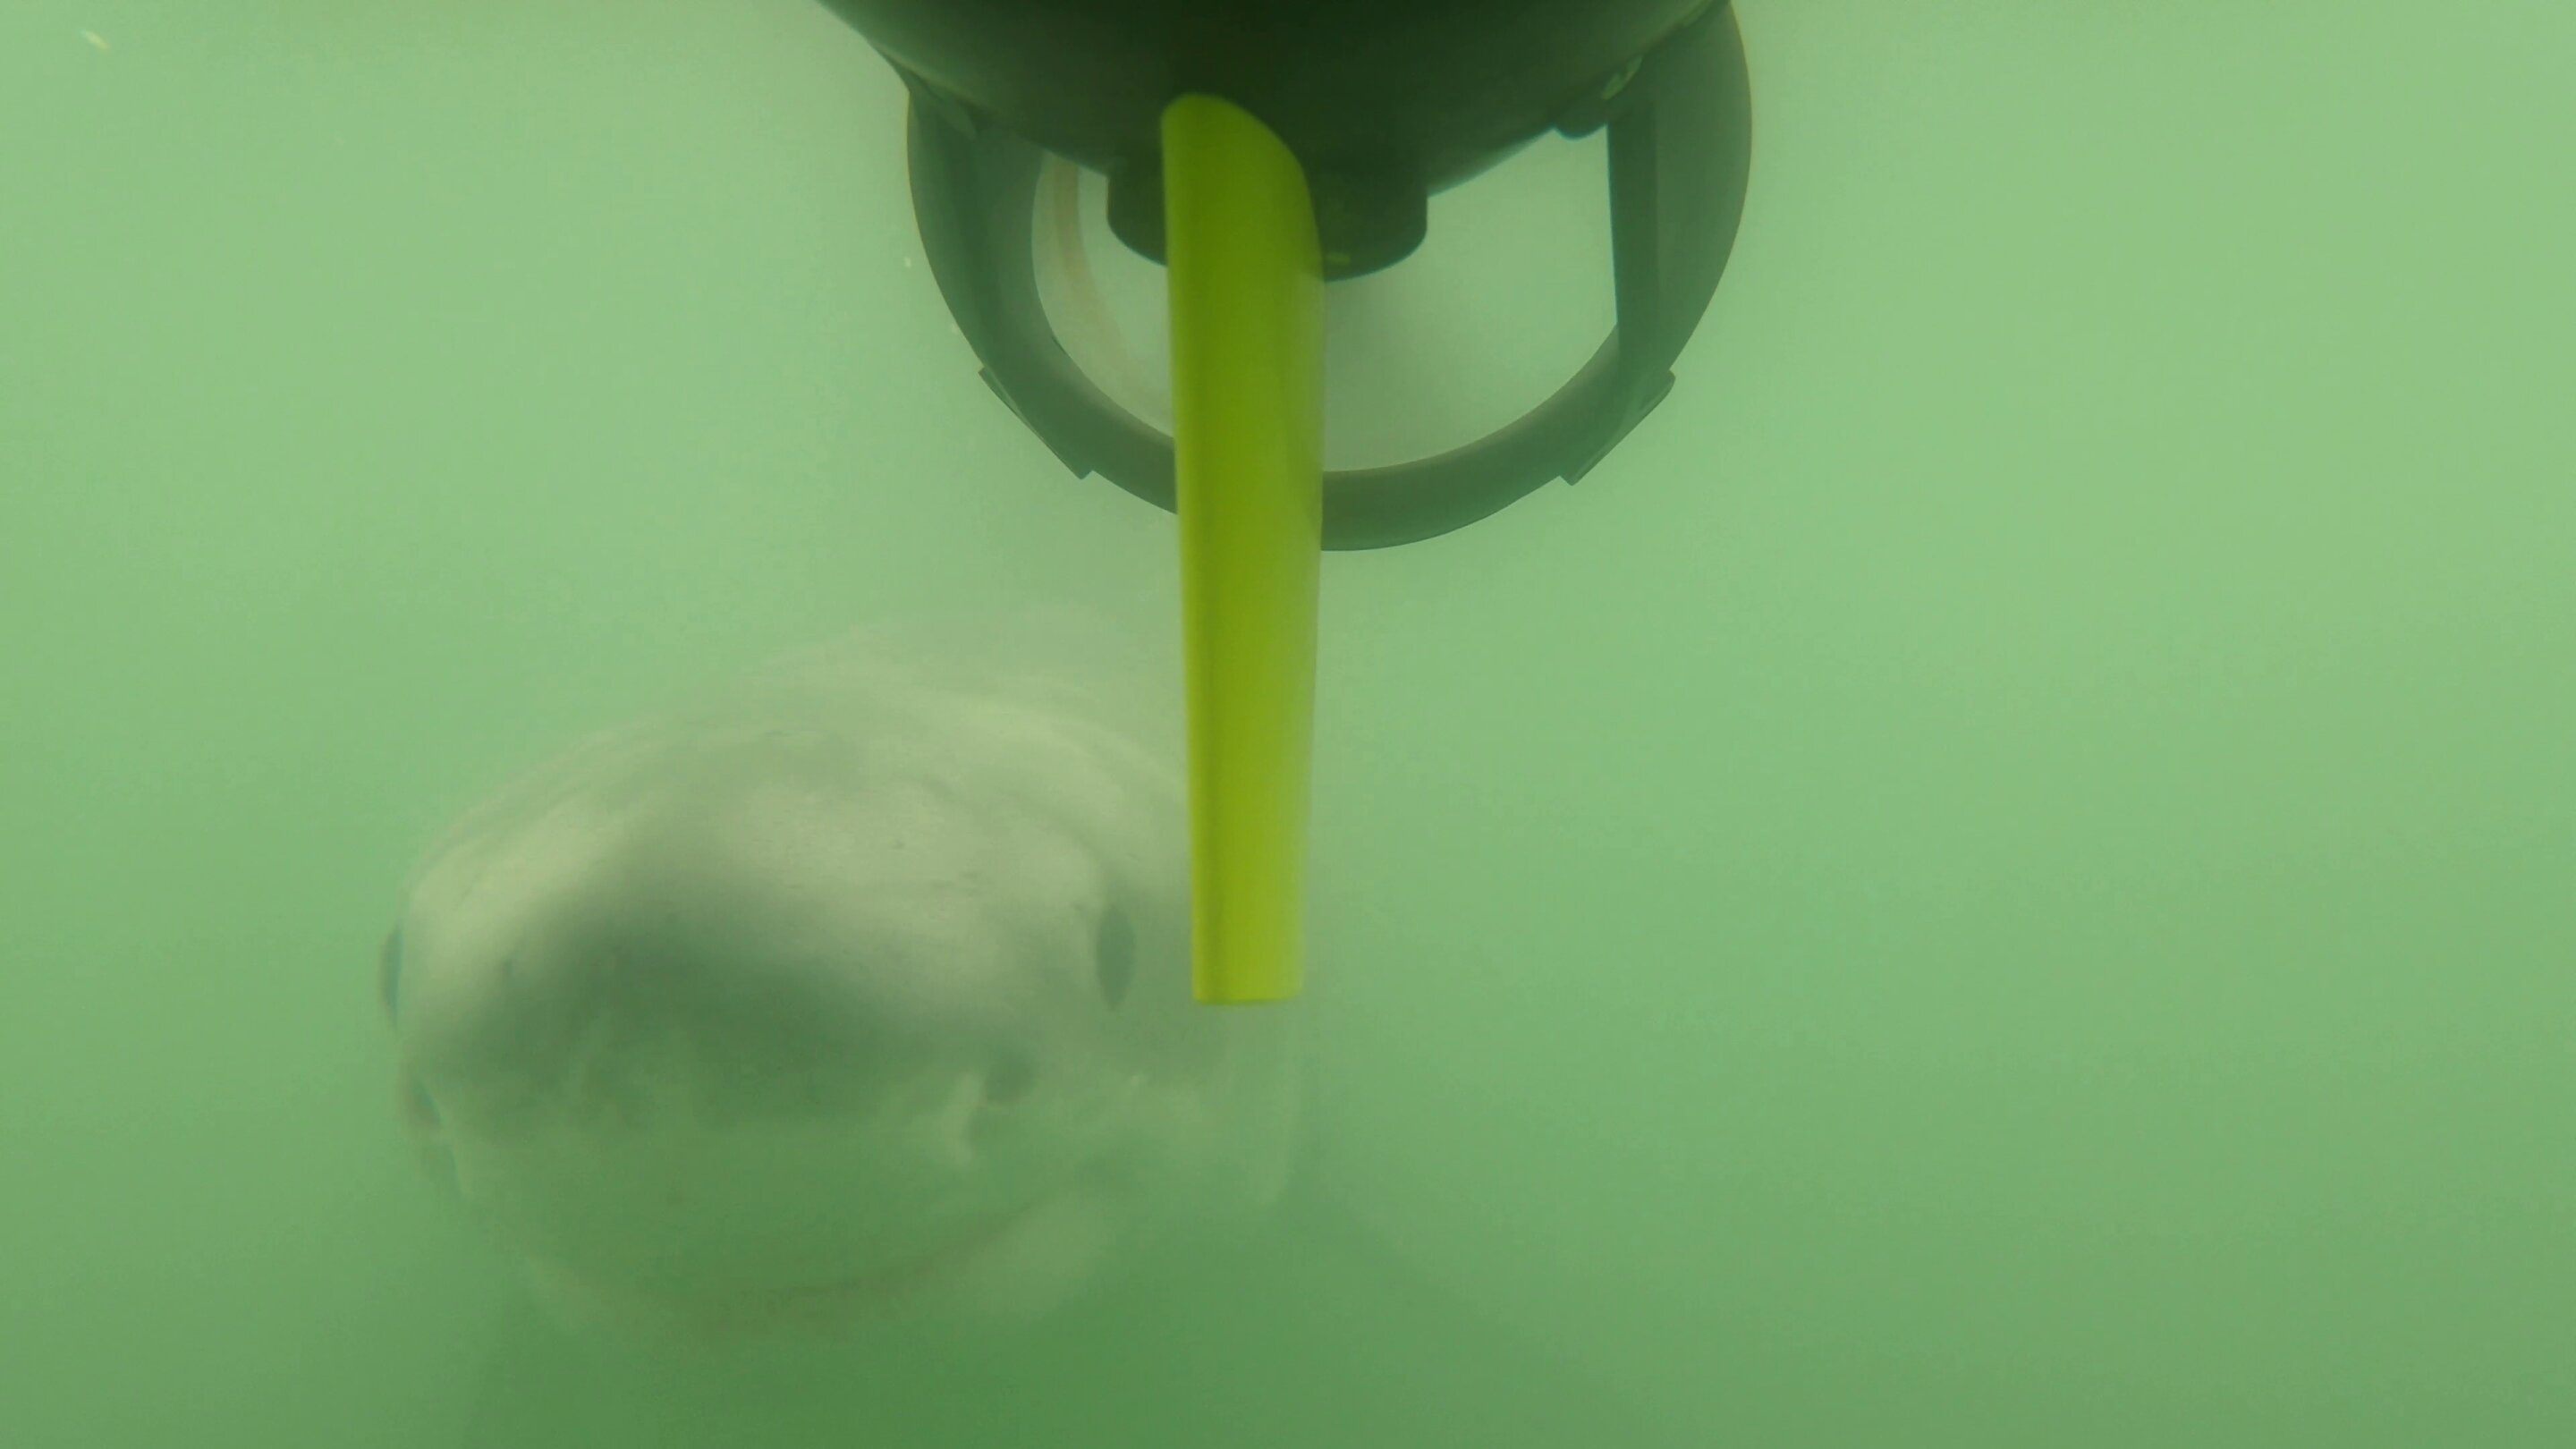 Juvenile great white shark viewed underwater